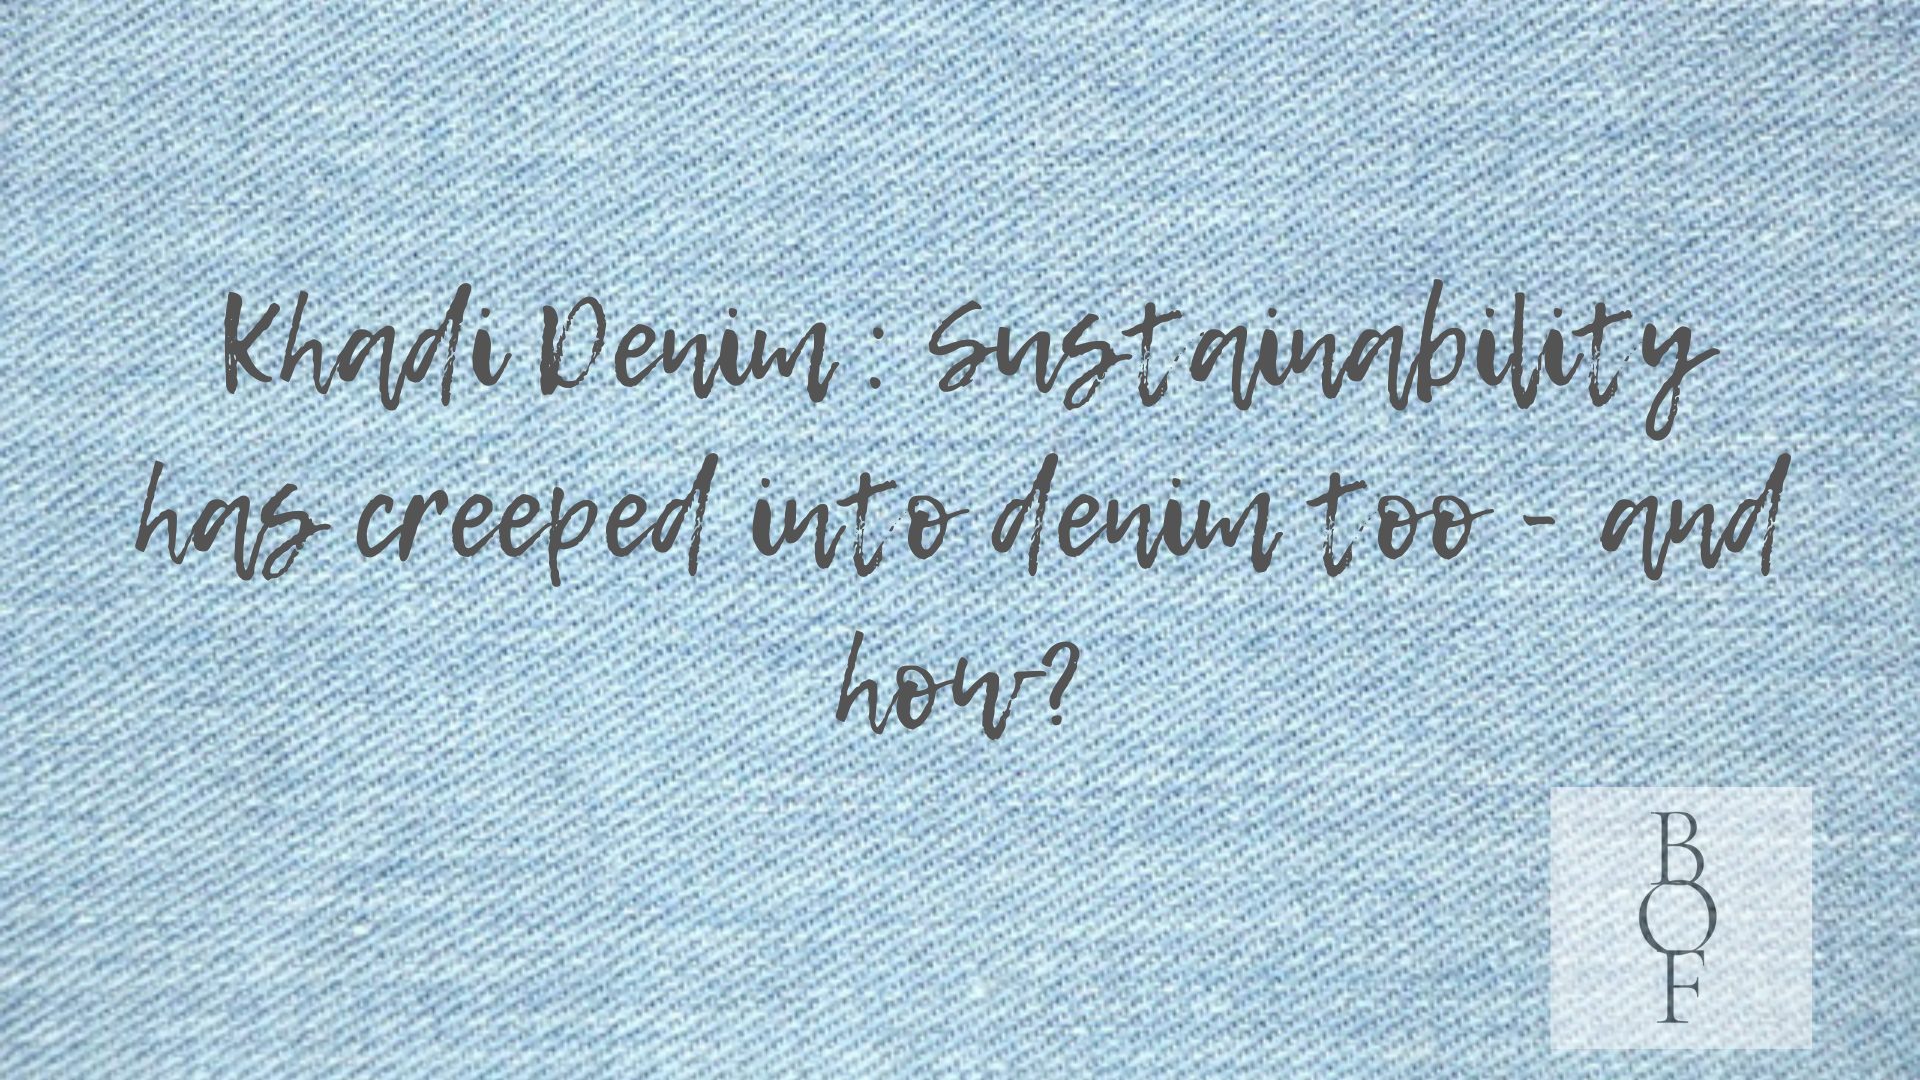 Khadi Denim : Sustainability has creeped into denim too – and how?